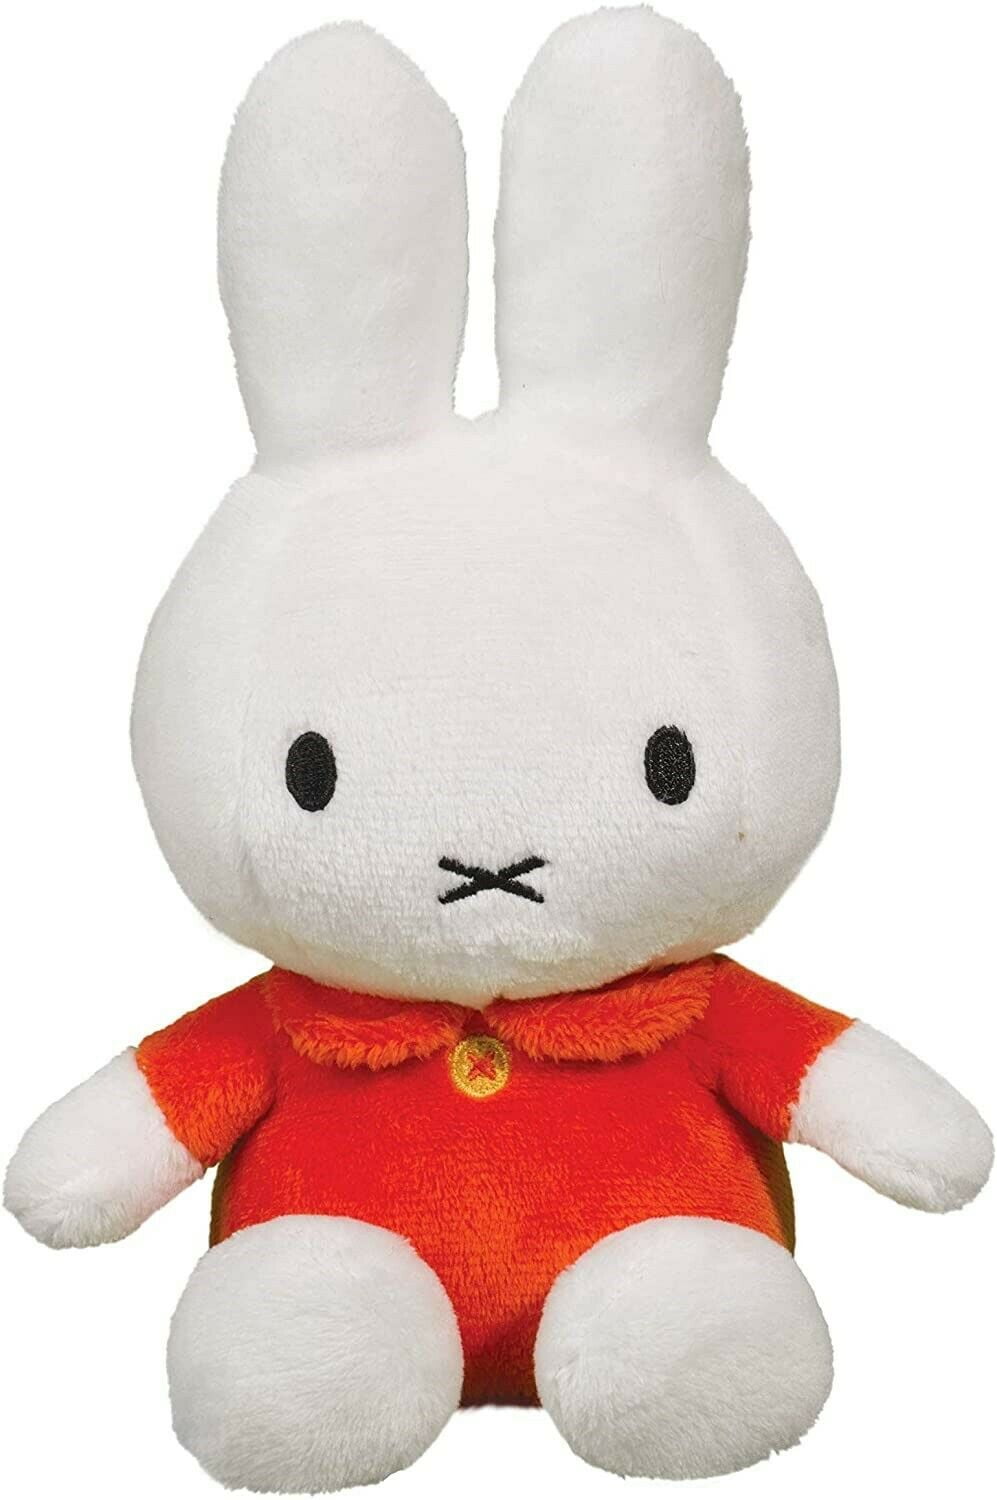 Douglas Puff Bunny Plush Soft Stuffed Toy Animal Rabbit 8" Oatmeal Tan New 